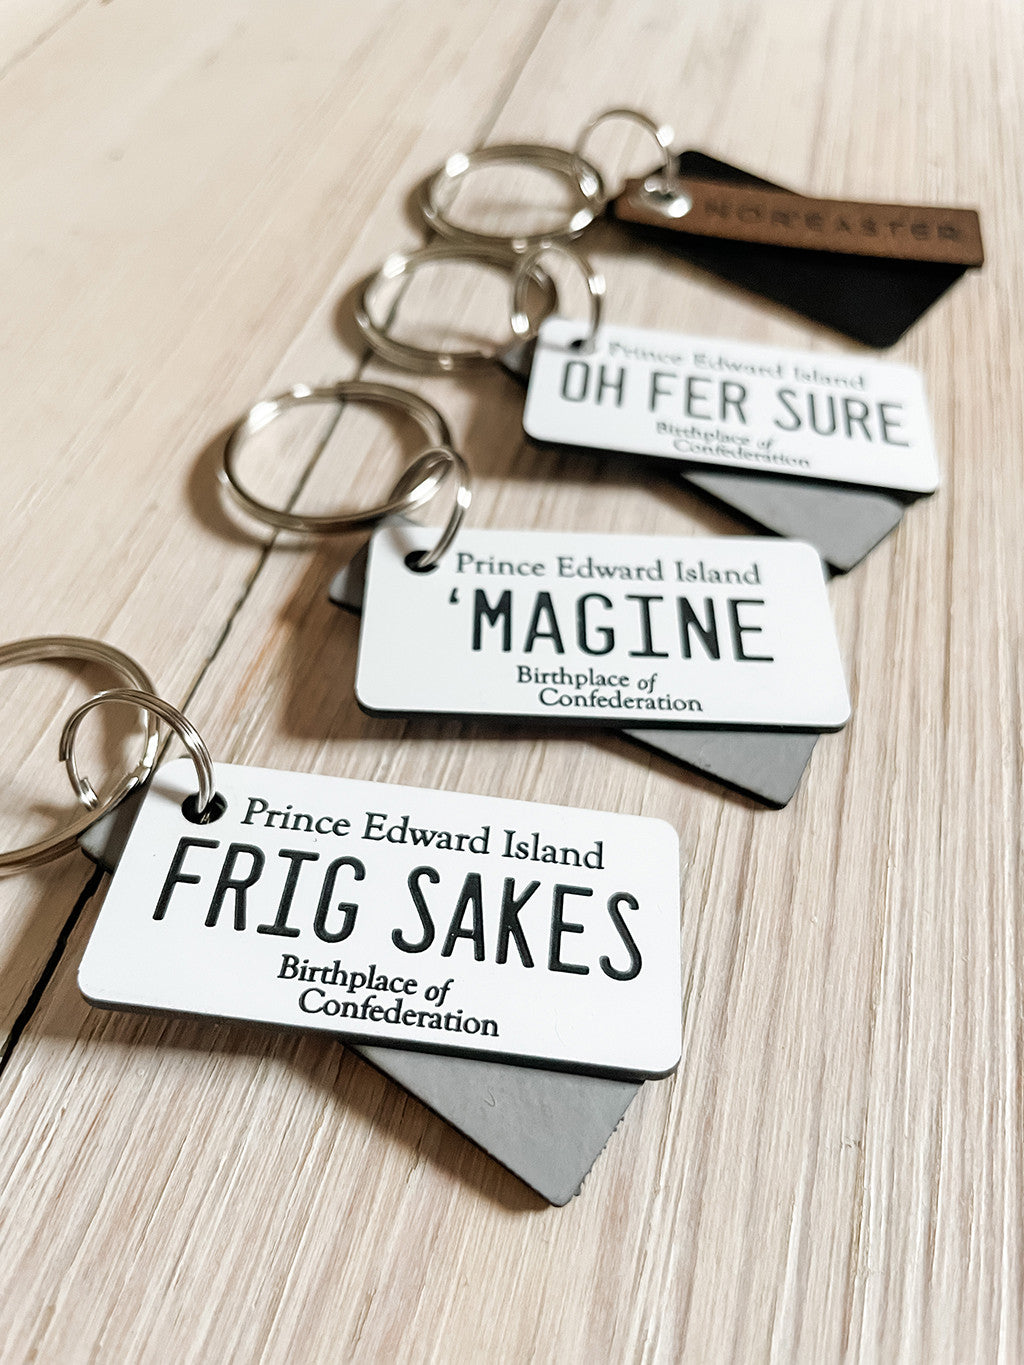 Prince Edward Island License Plate Keychains